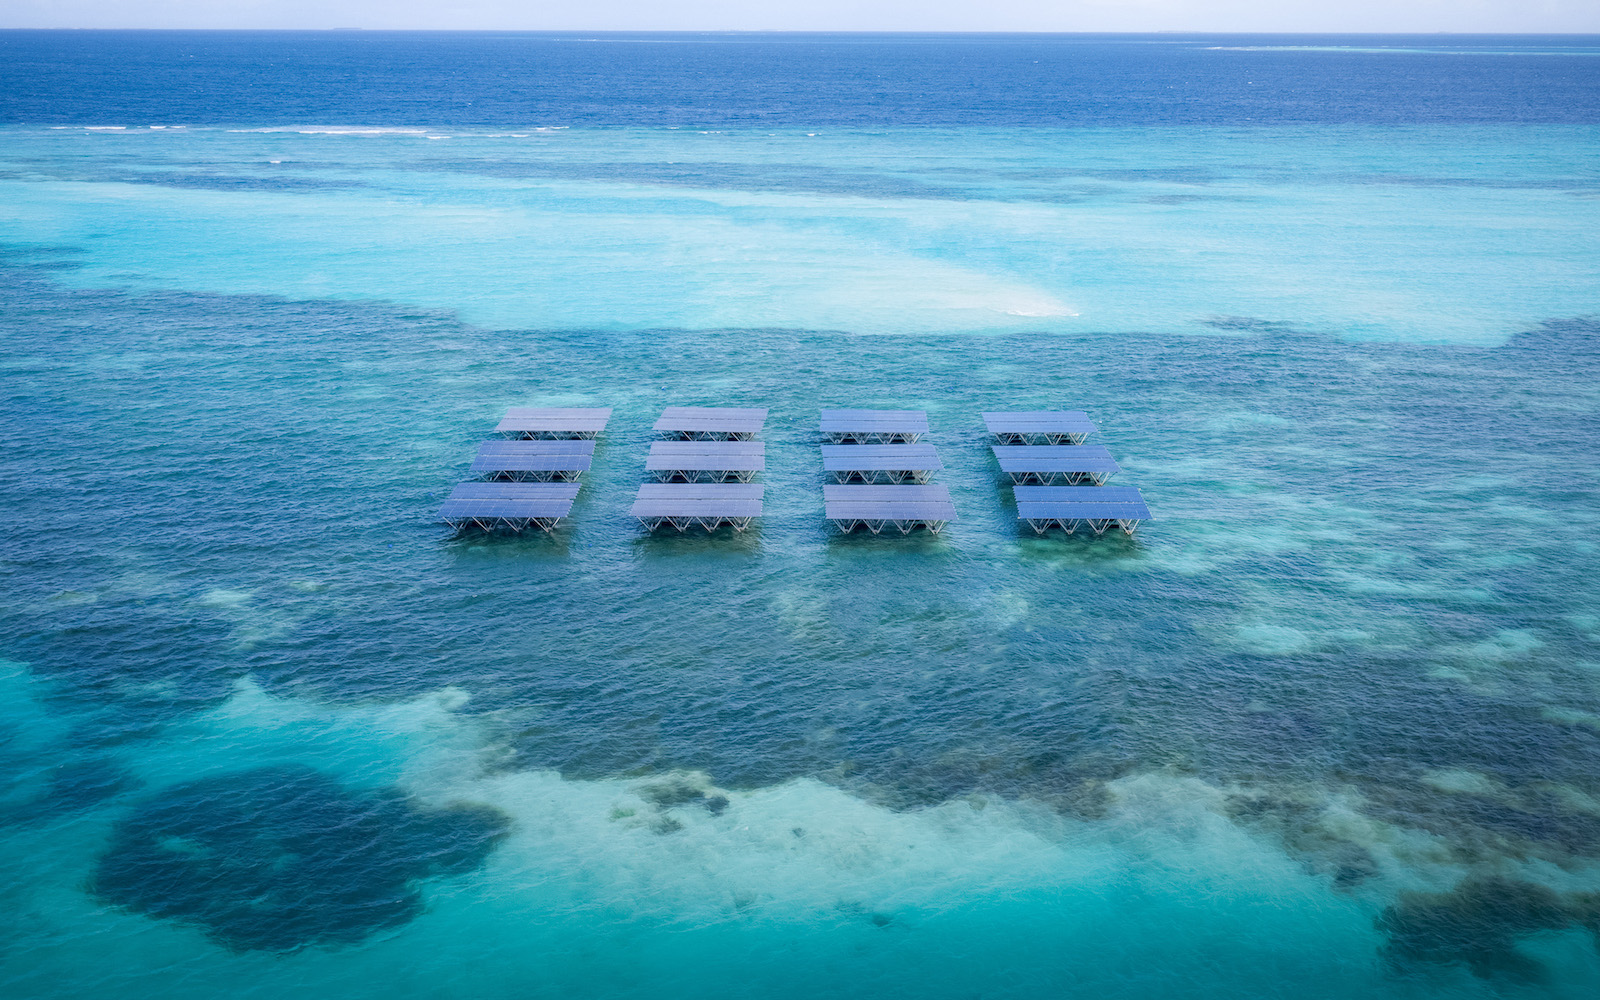 Swimsol SolarSea - World's first ocean floating solar system, Maldives